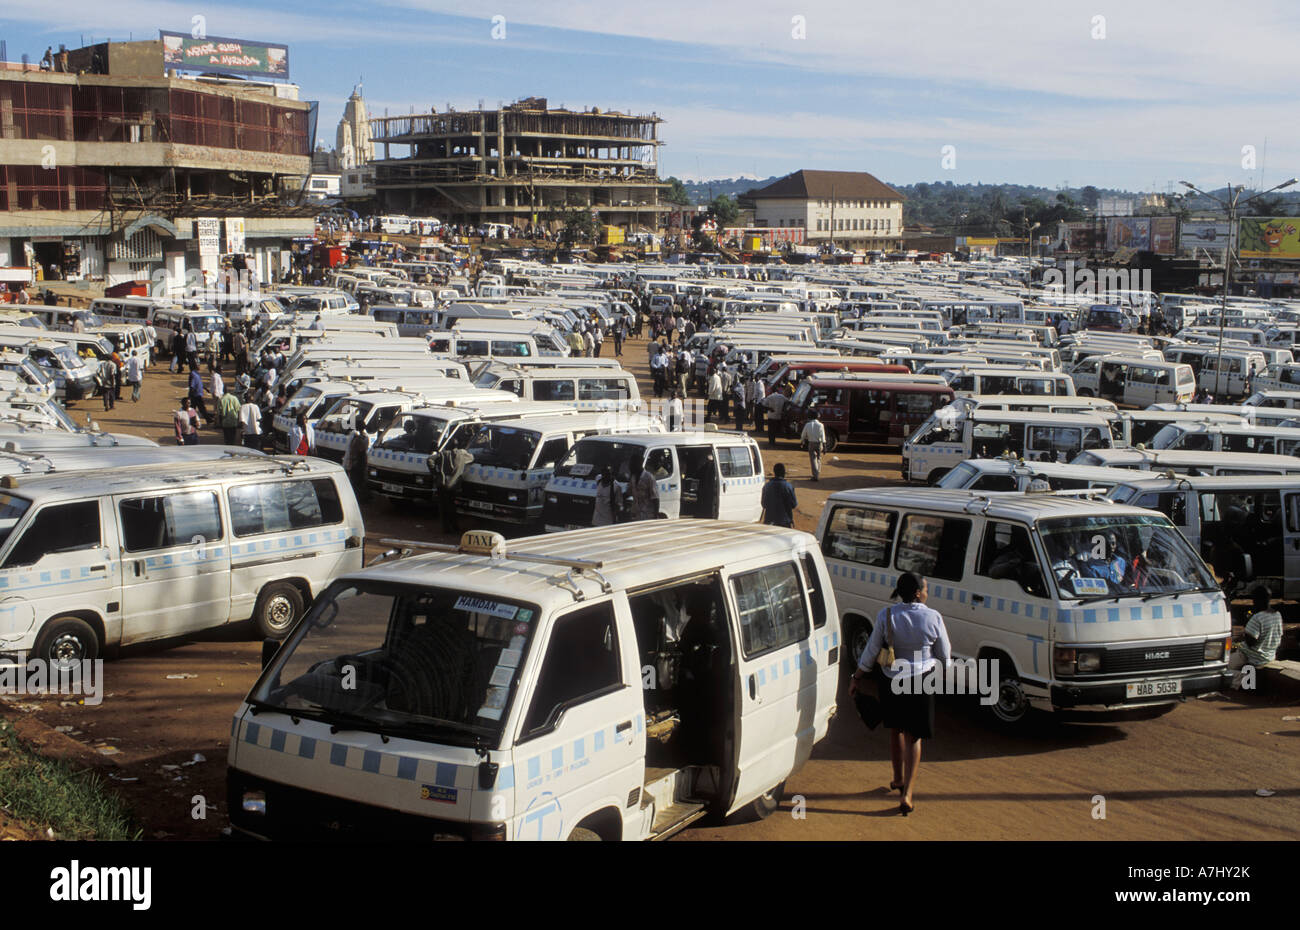 Kampala Taxi Park voller Minibusse Matatus Umgang mit mehr als 1 Million Menschen jeden Tag Kampala-Uganda Stockfoto